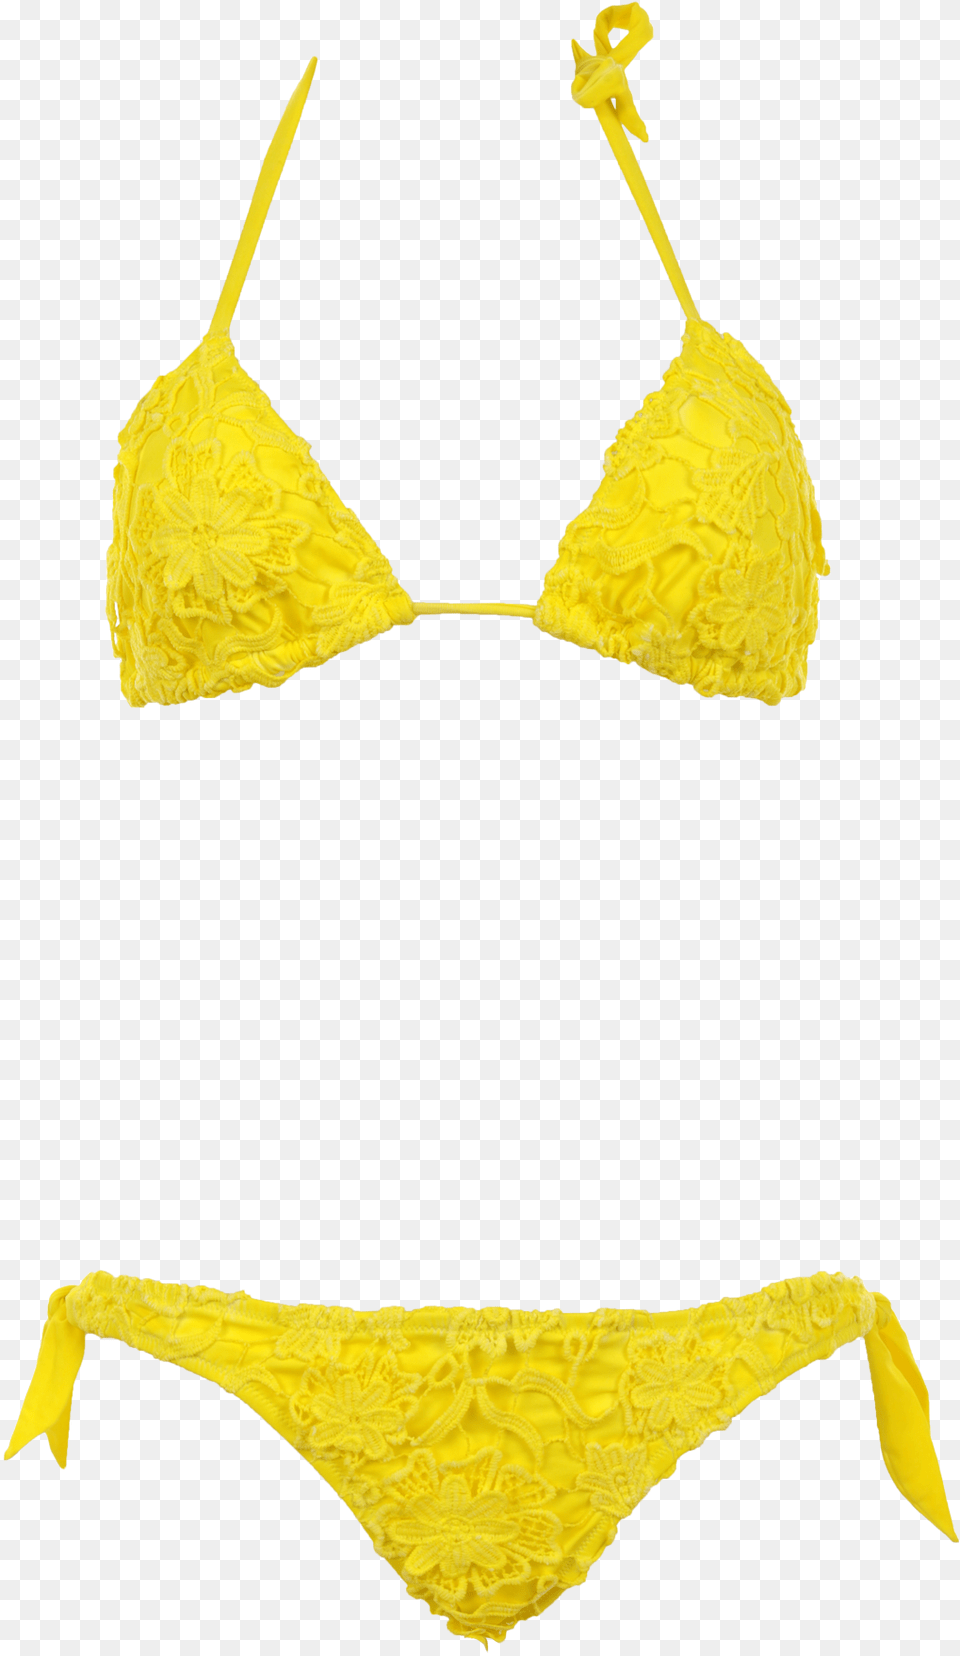 Padded Macram Lace Yellow Triangle Bikini With Removable Swimsuit Bottom, Clothing, Swimwear Png Image